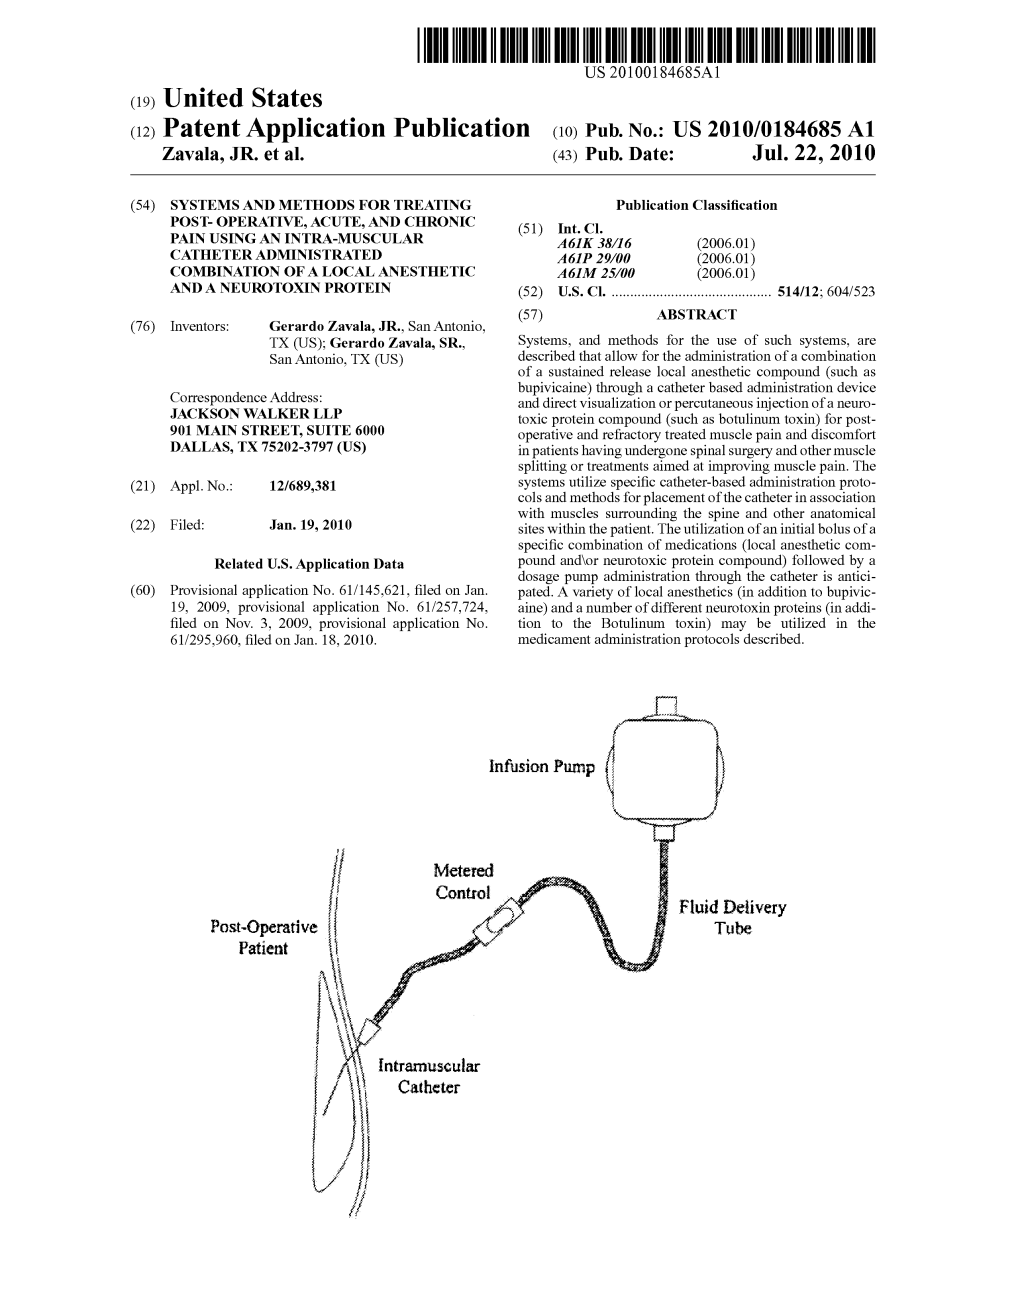 (12) Patent Application Publication (10) Pub. No.: US 2010/0184685 A1 Zavala, JR